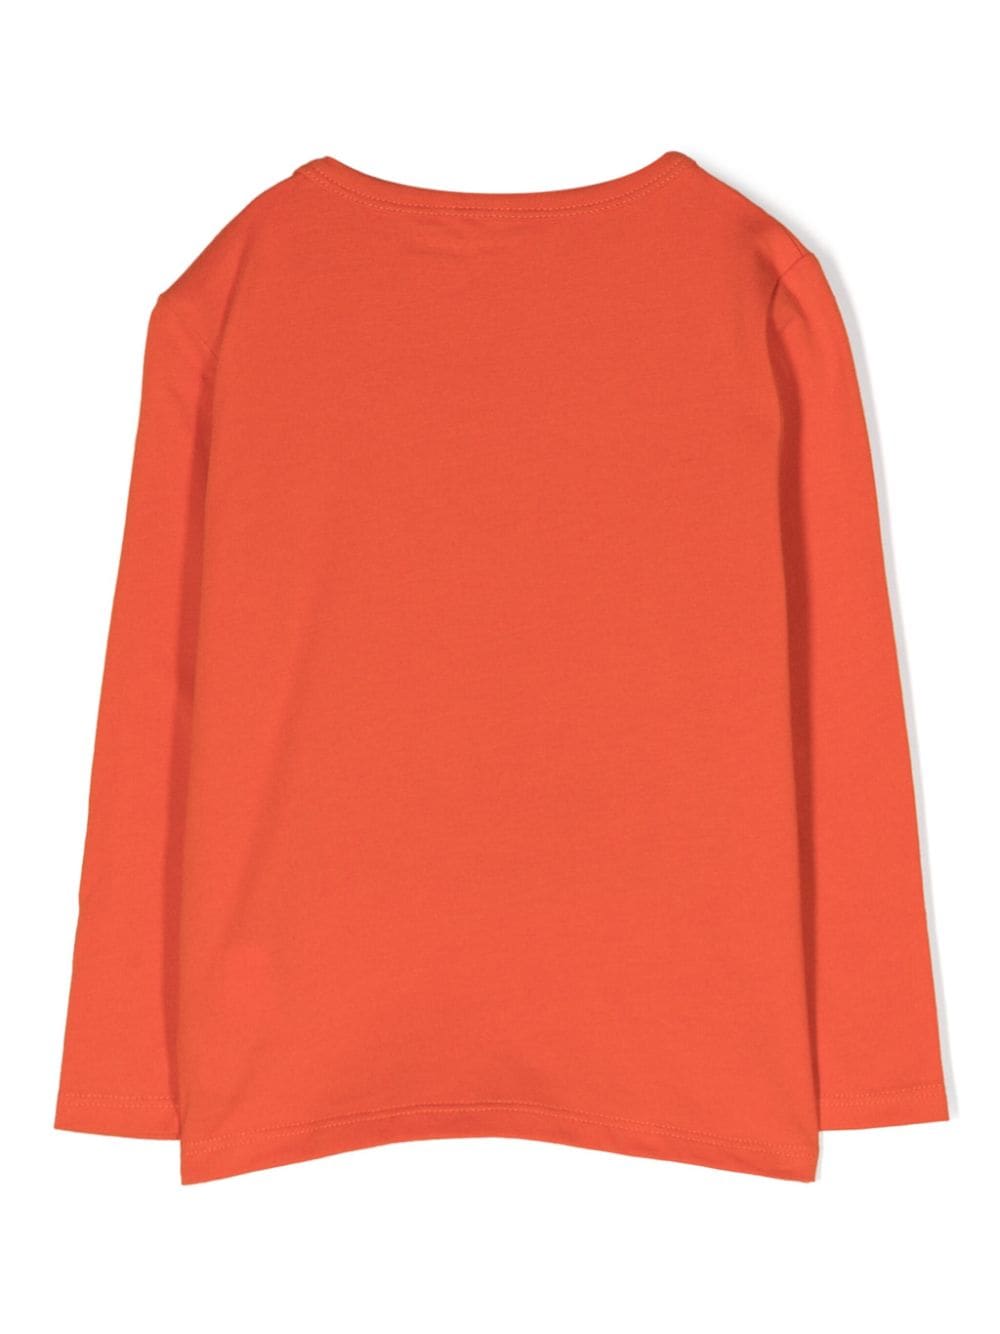 Orange cotton jersey baby girl STELLA McCARTNEY t-shirt | Carofiglio Junior